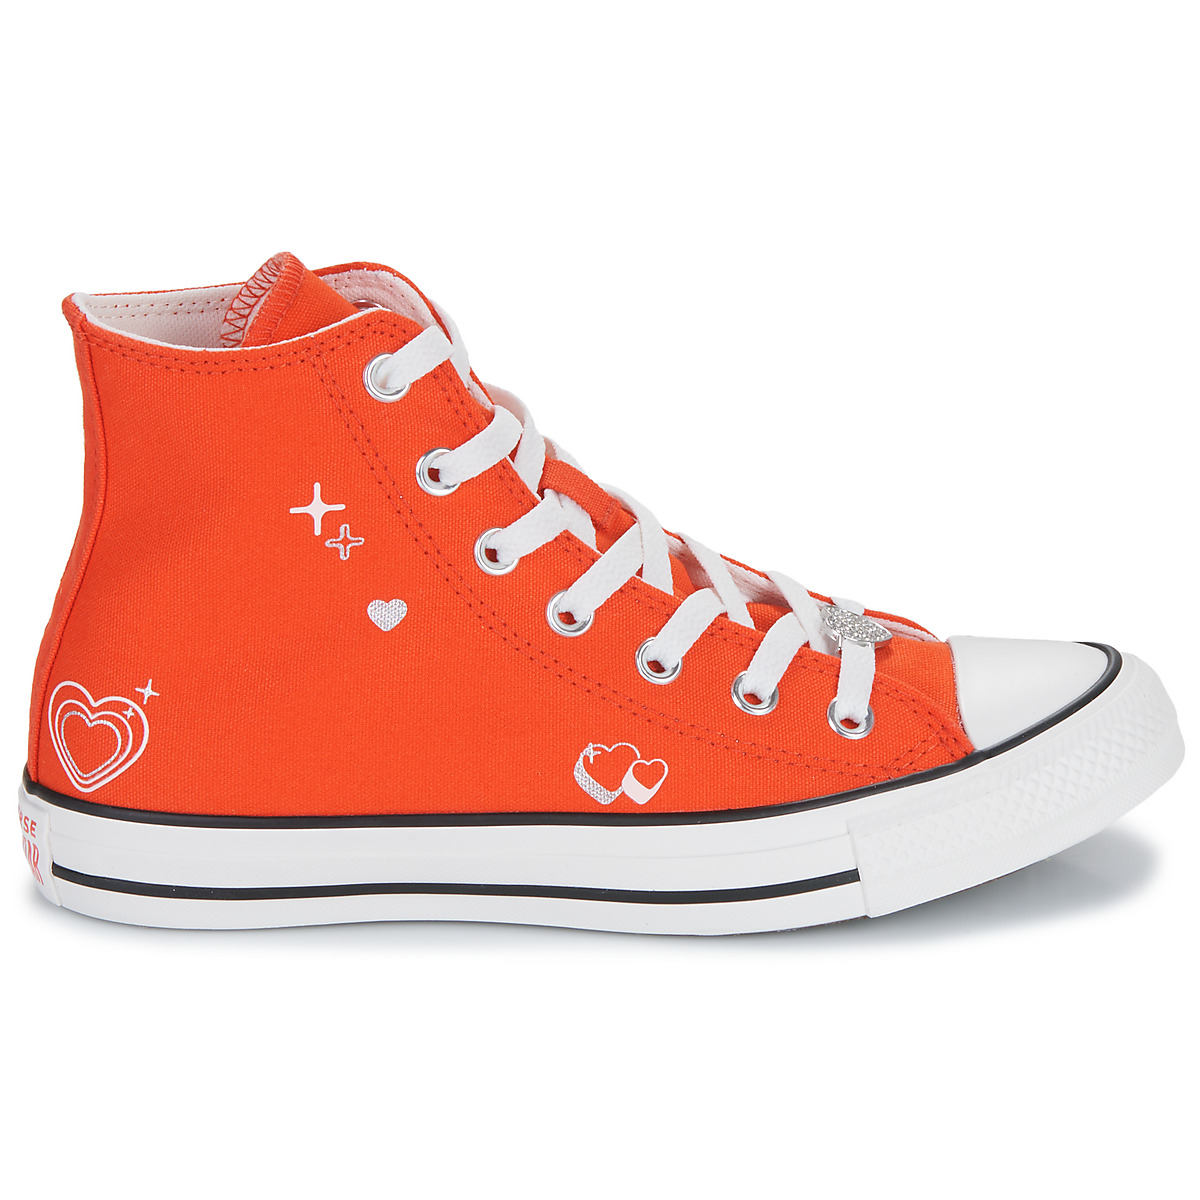 Converse Orange CHUCK TAYLOR ALL STAR ws9wOa7k